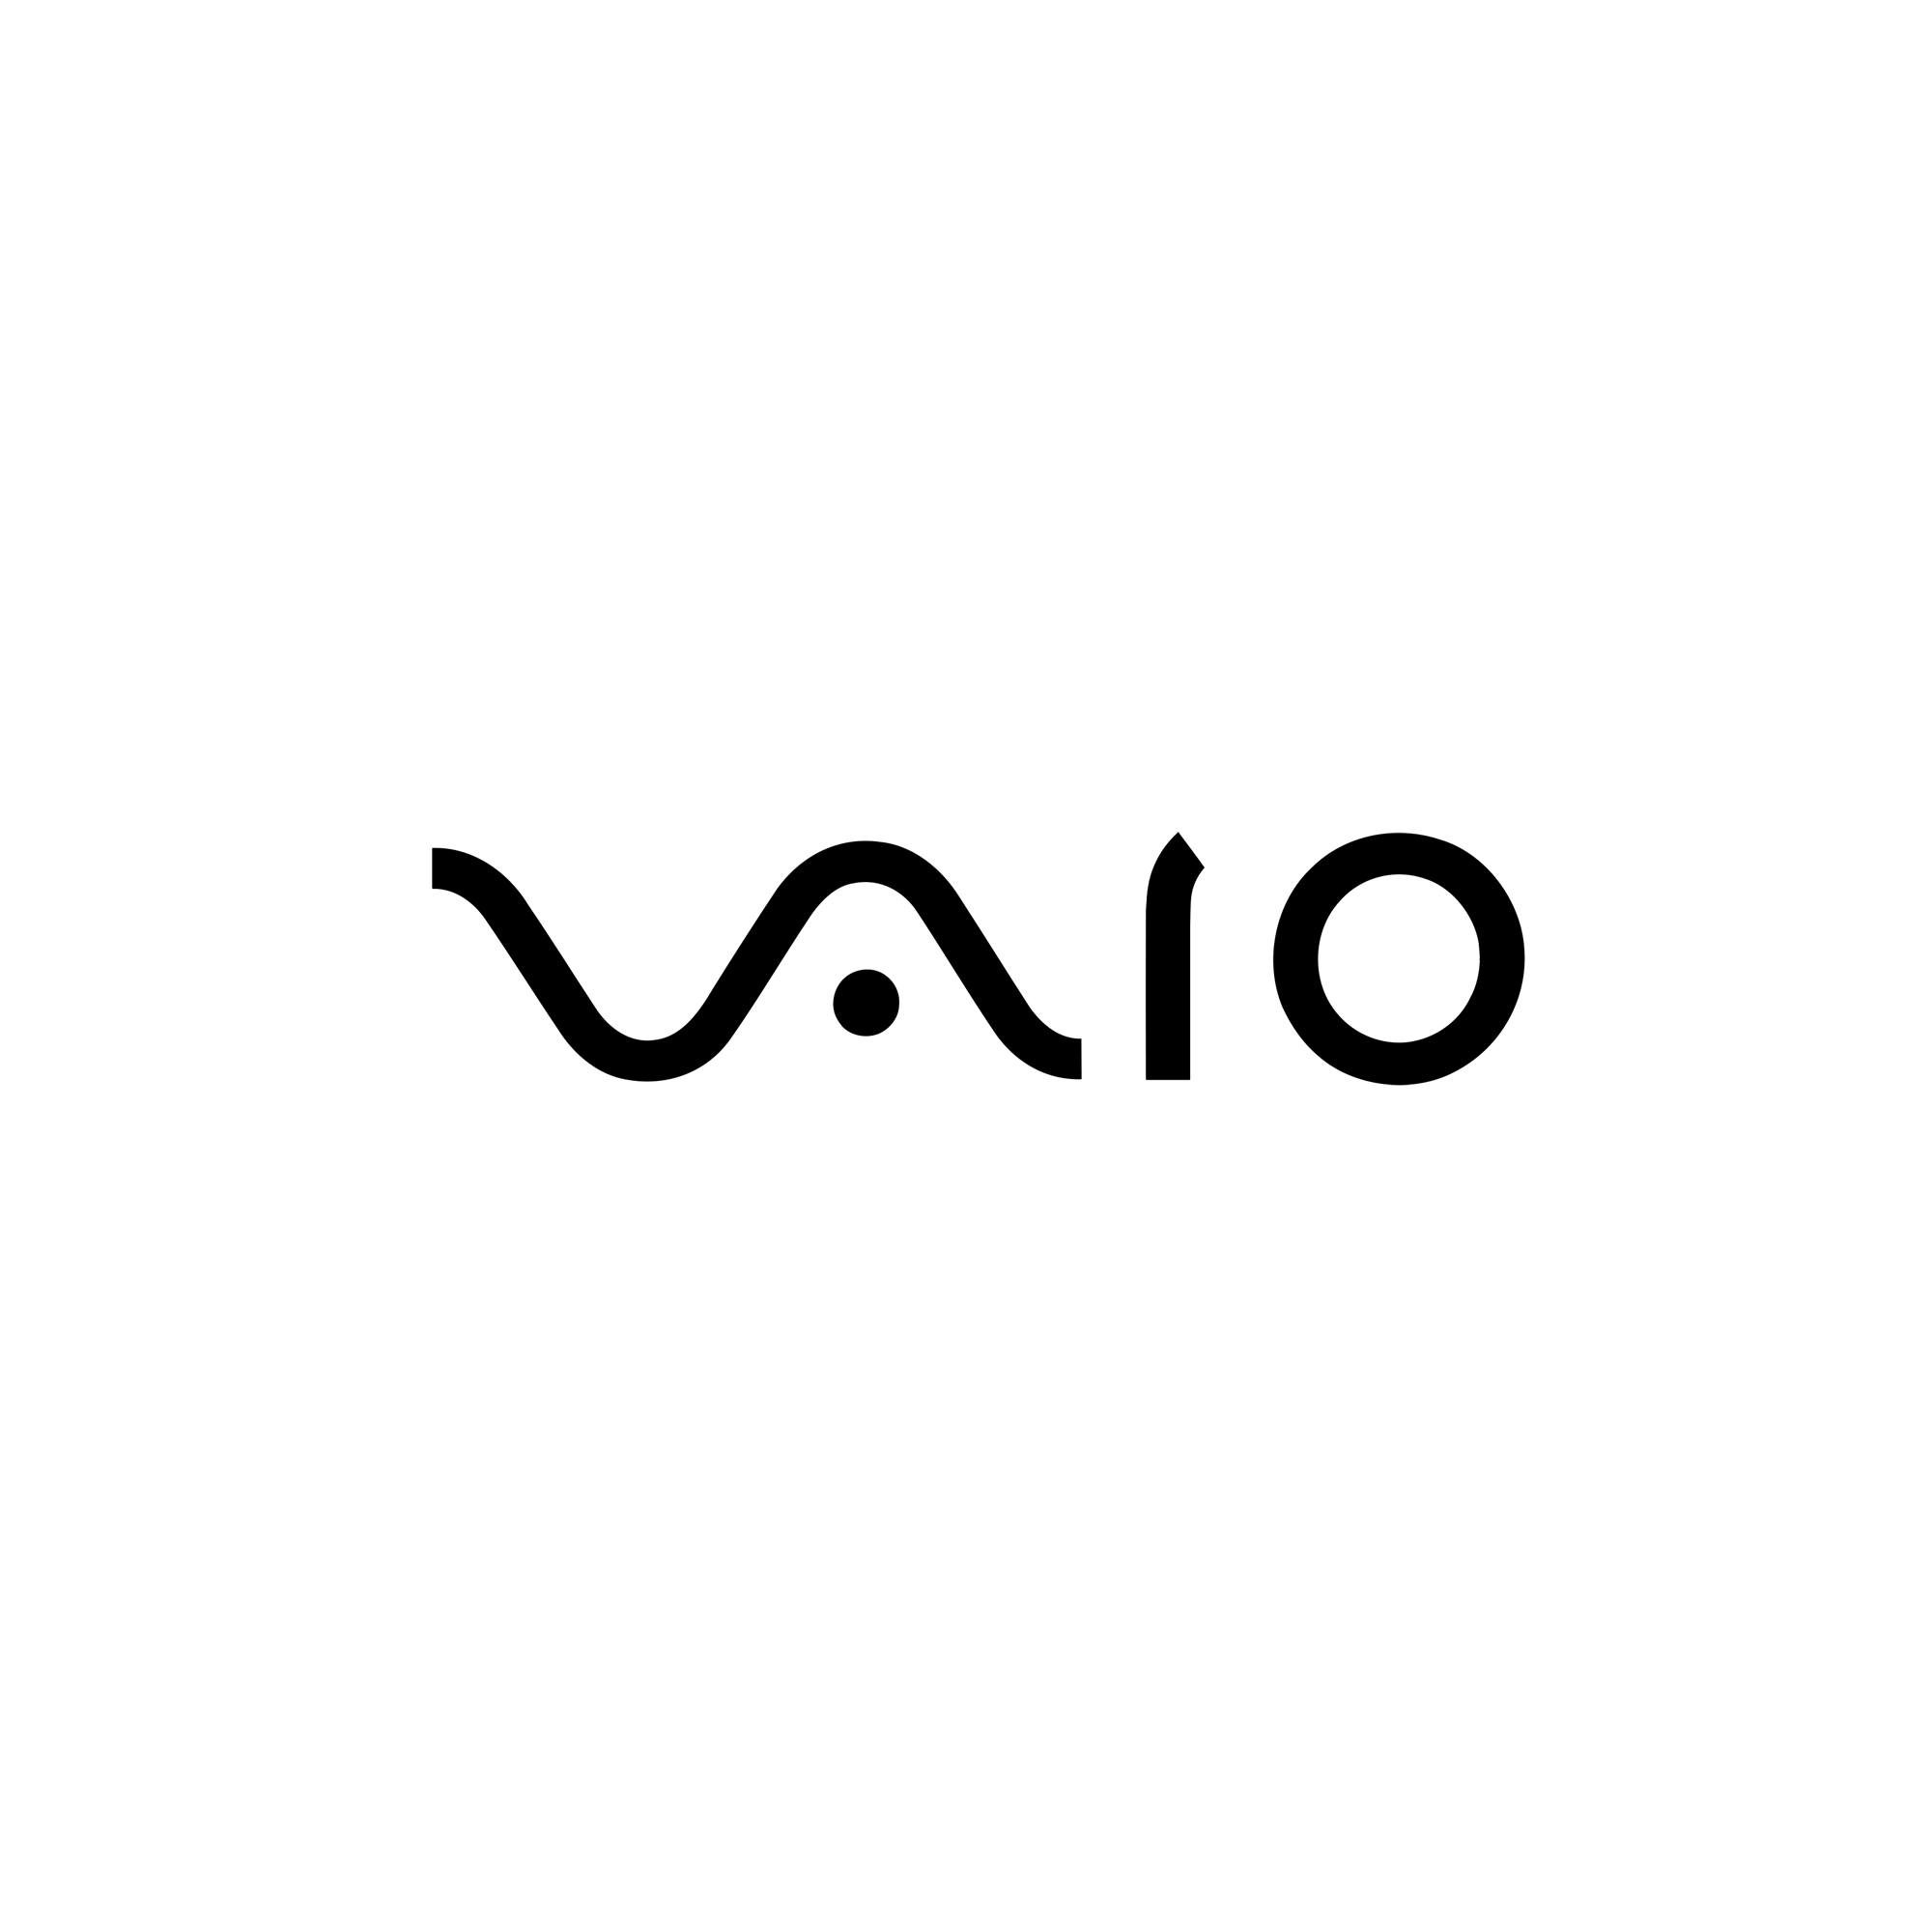 VAIO Corporation